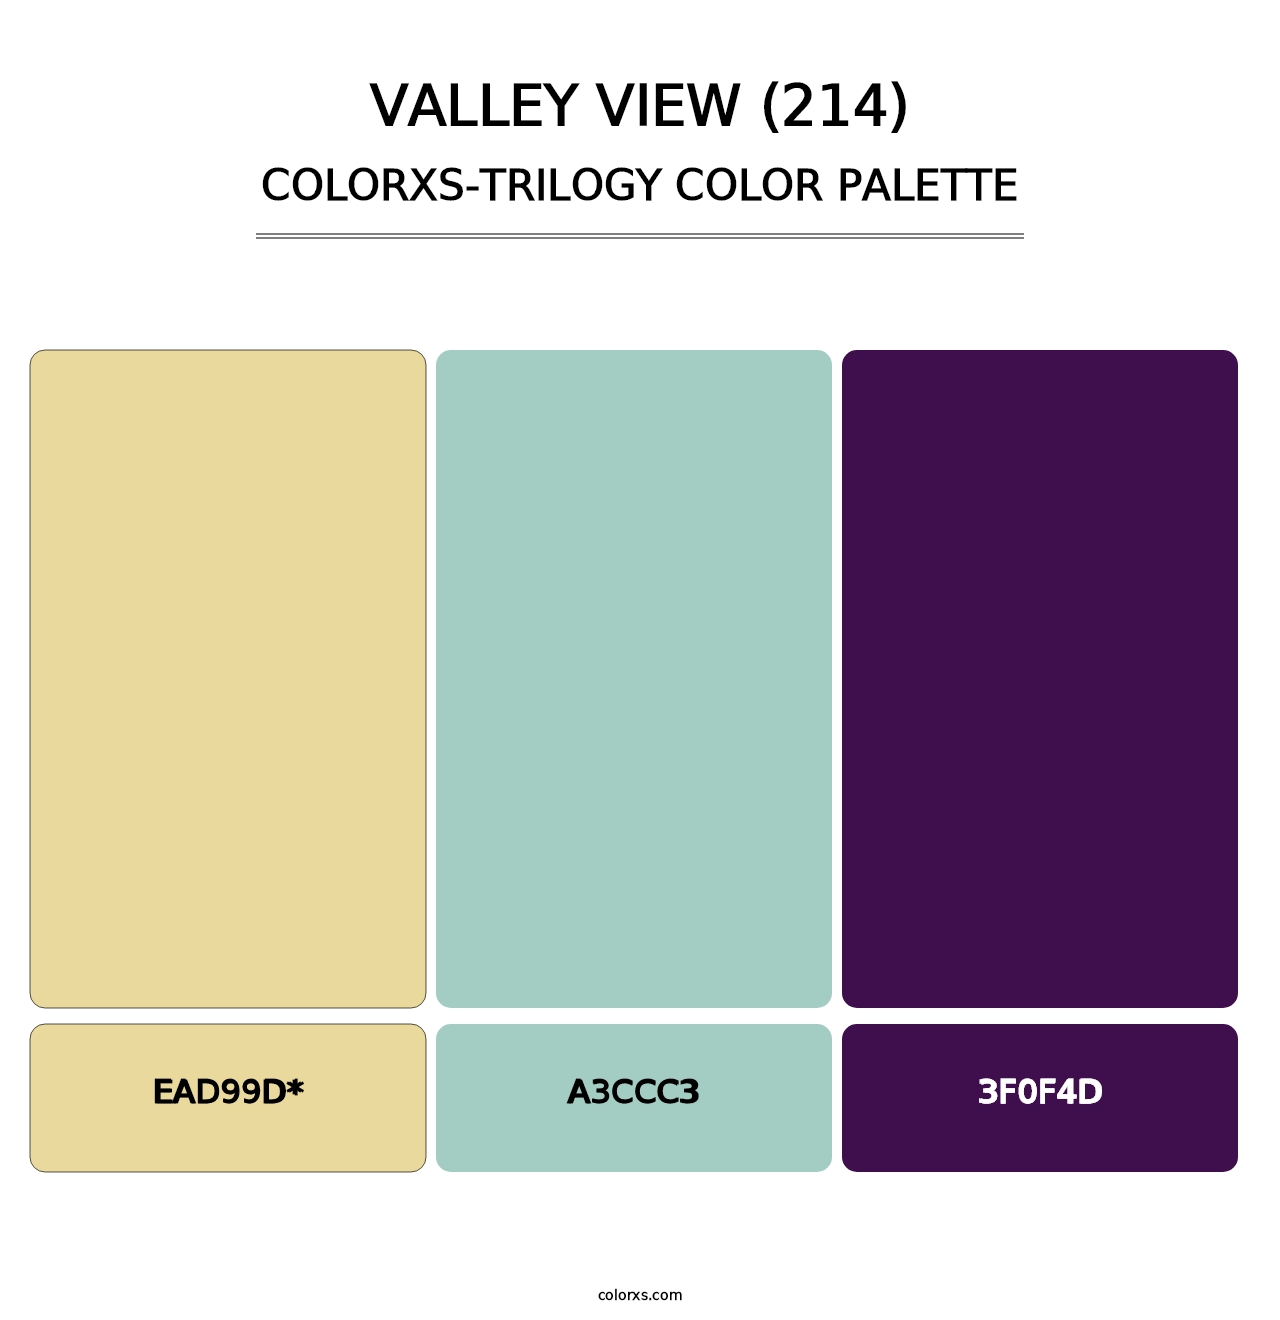 Valley View (214) - Colorxs Trilogy Palette